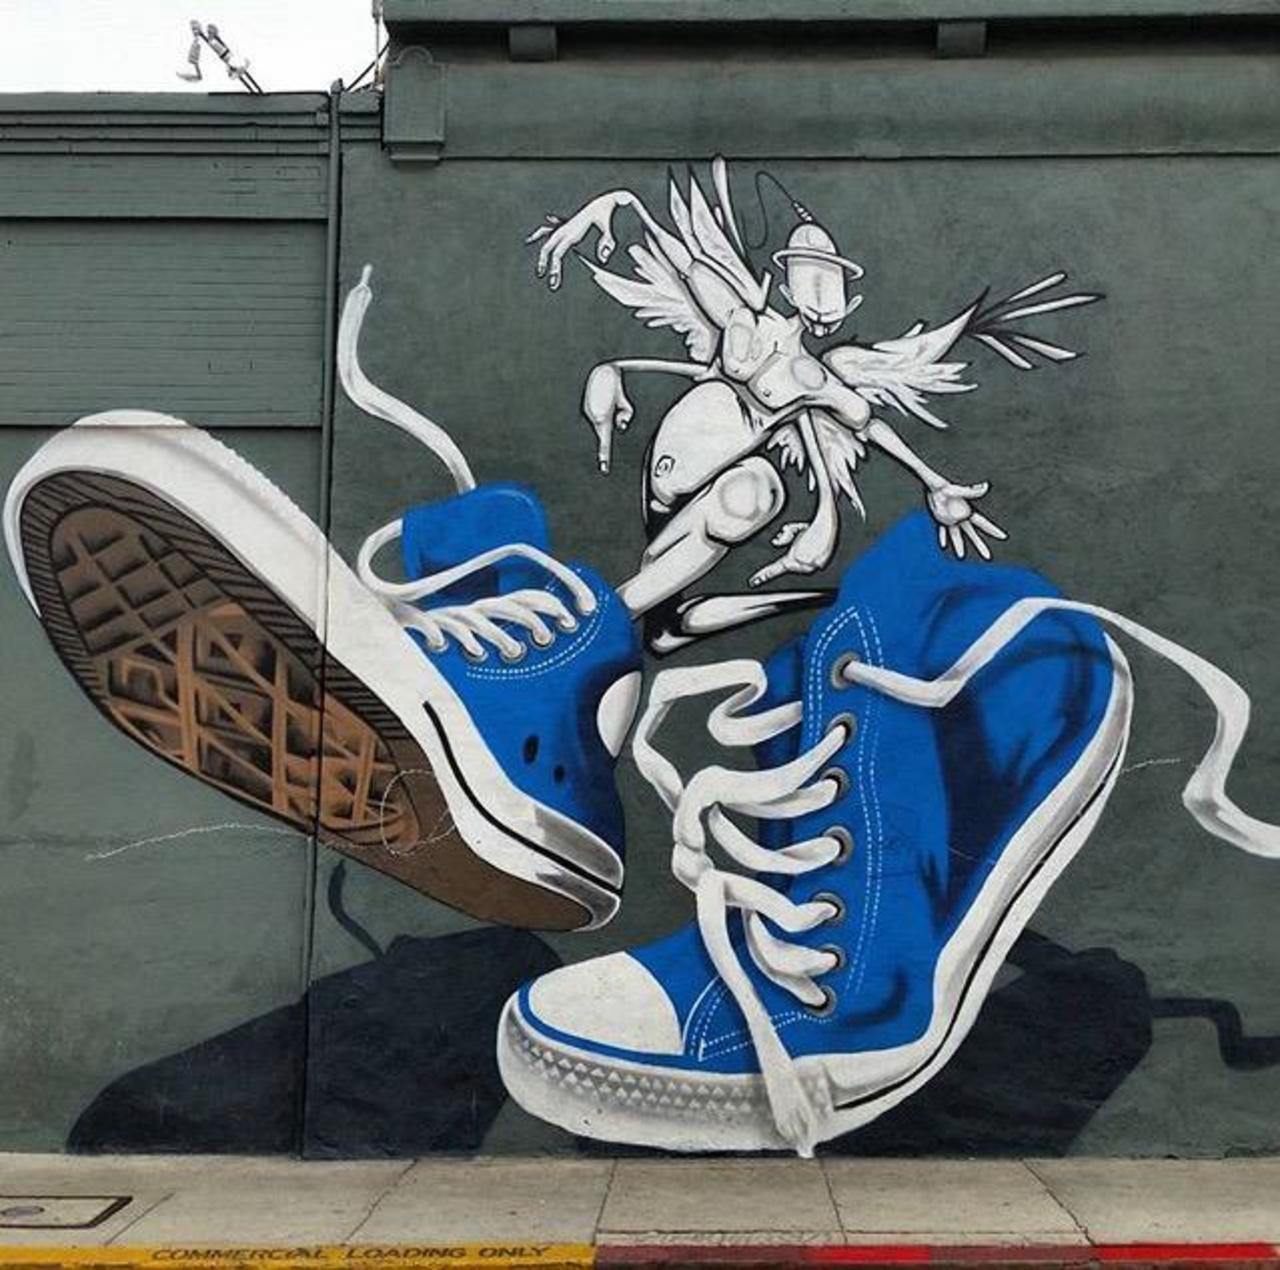 RT @GoogleStreetArt: Street Art by Man One Art 

#arte #art #graffiti #streetart http://t.co/XpoFmabgRt